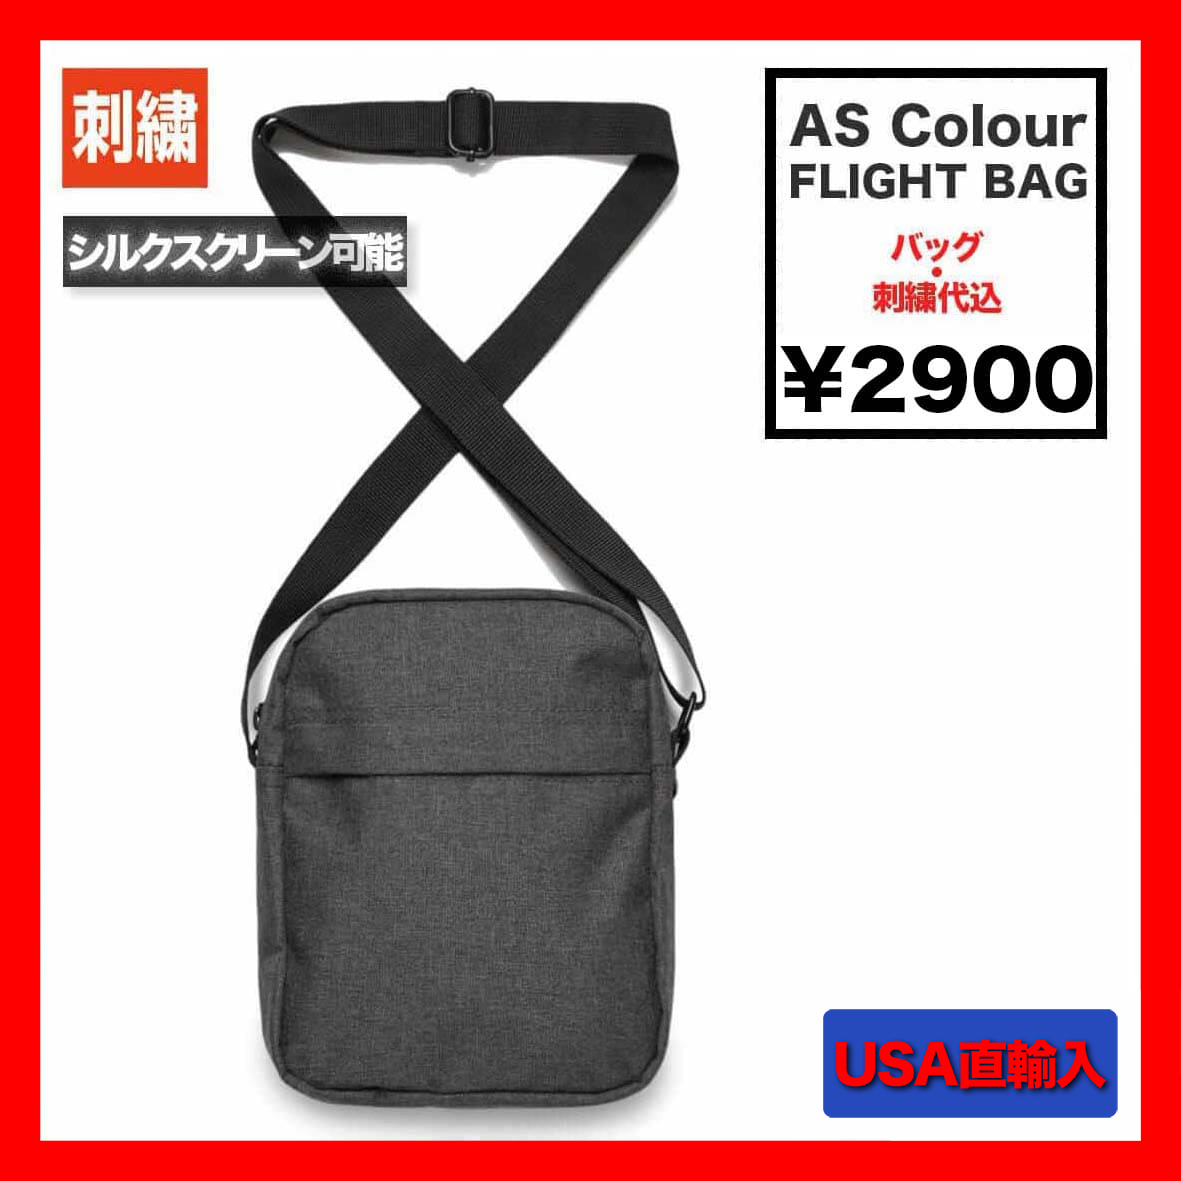 AS Colour アズカラー 6.6 oz Flight Bag (品番1016US)